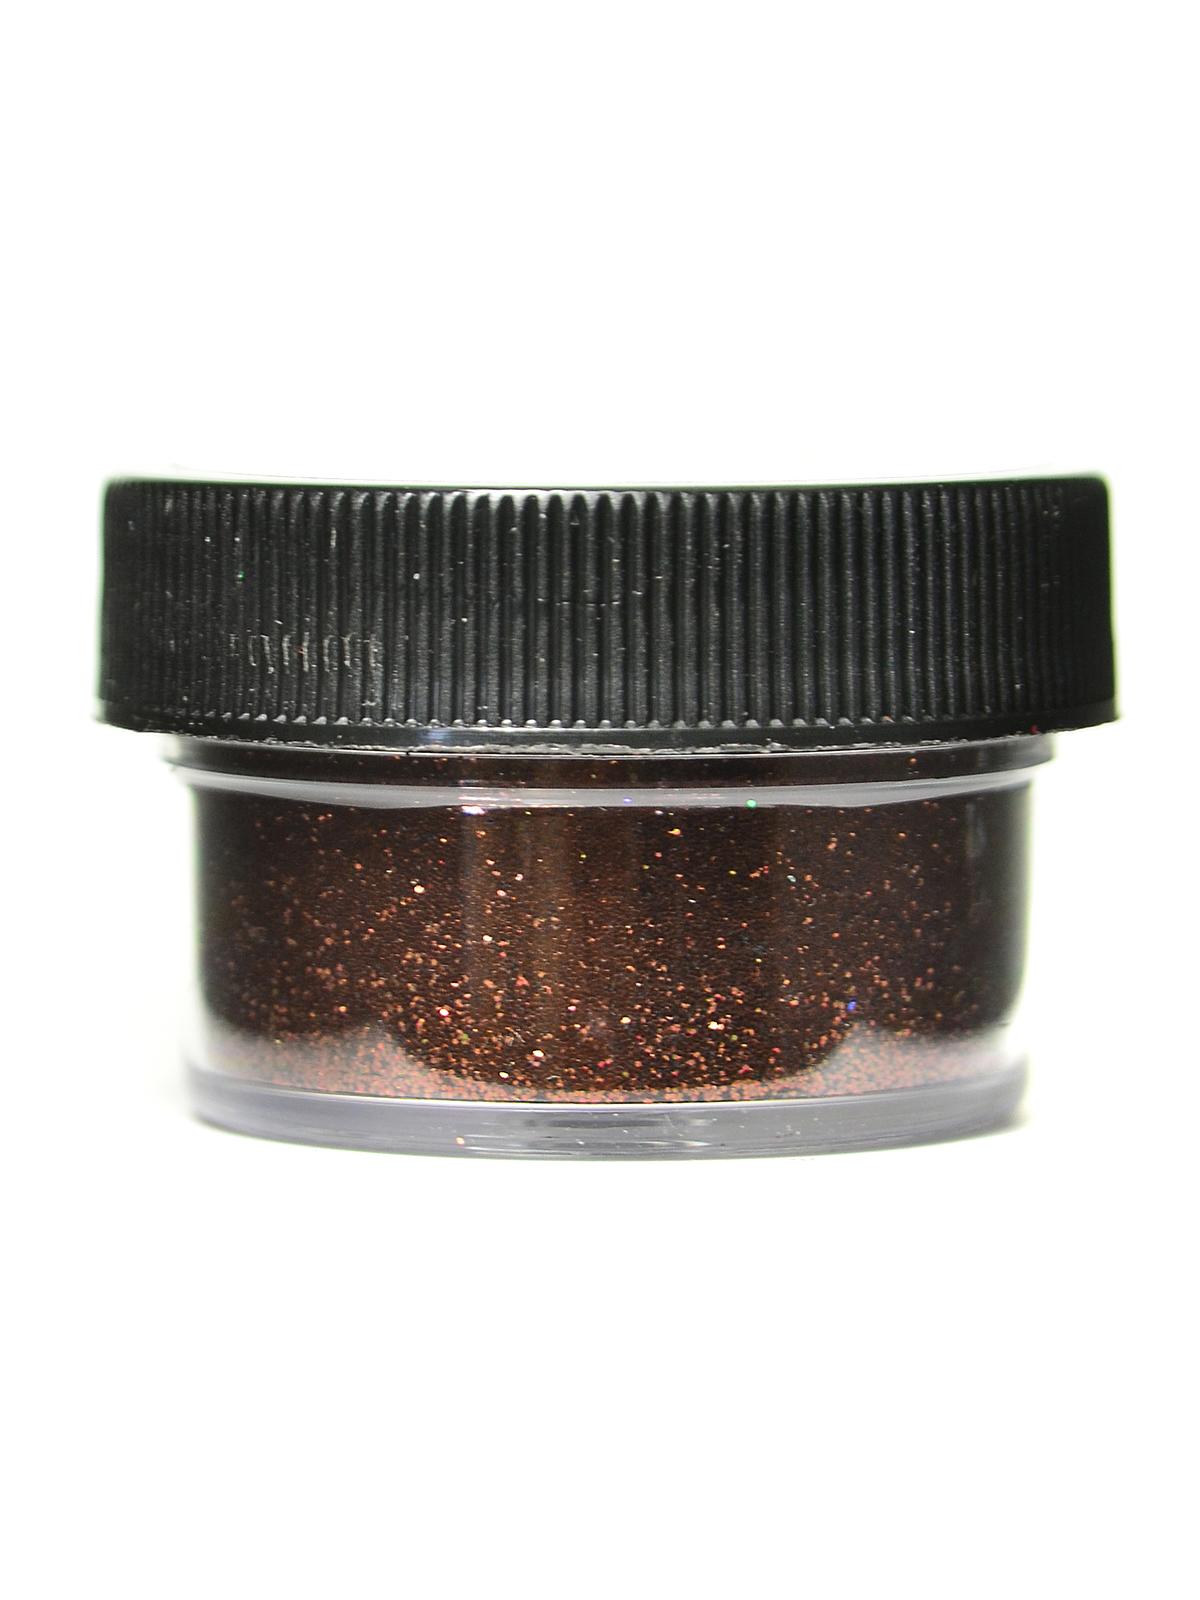 Ultrafine Opaque Glitter Brown 1 2 Oz. Jar